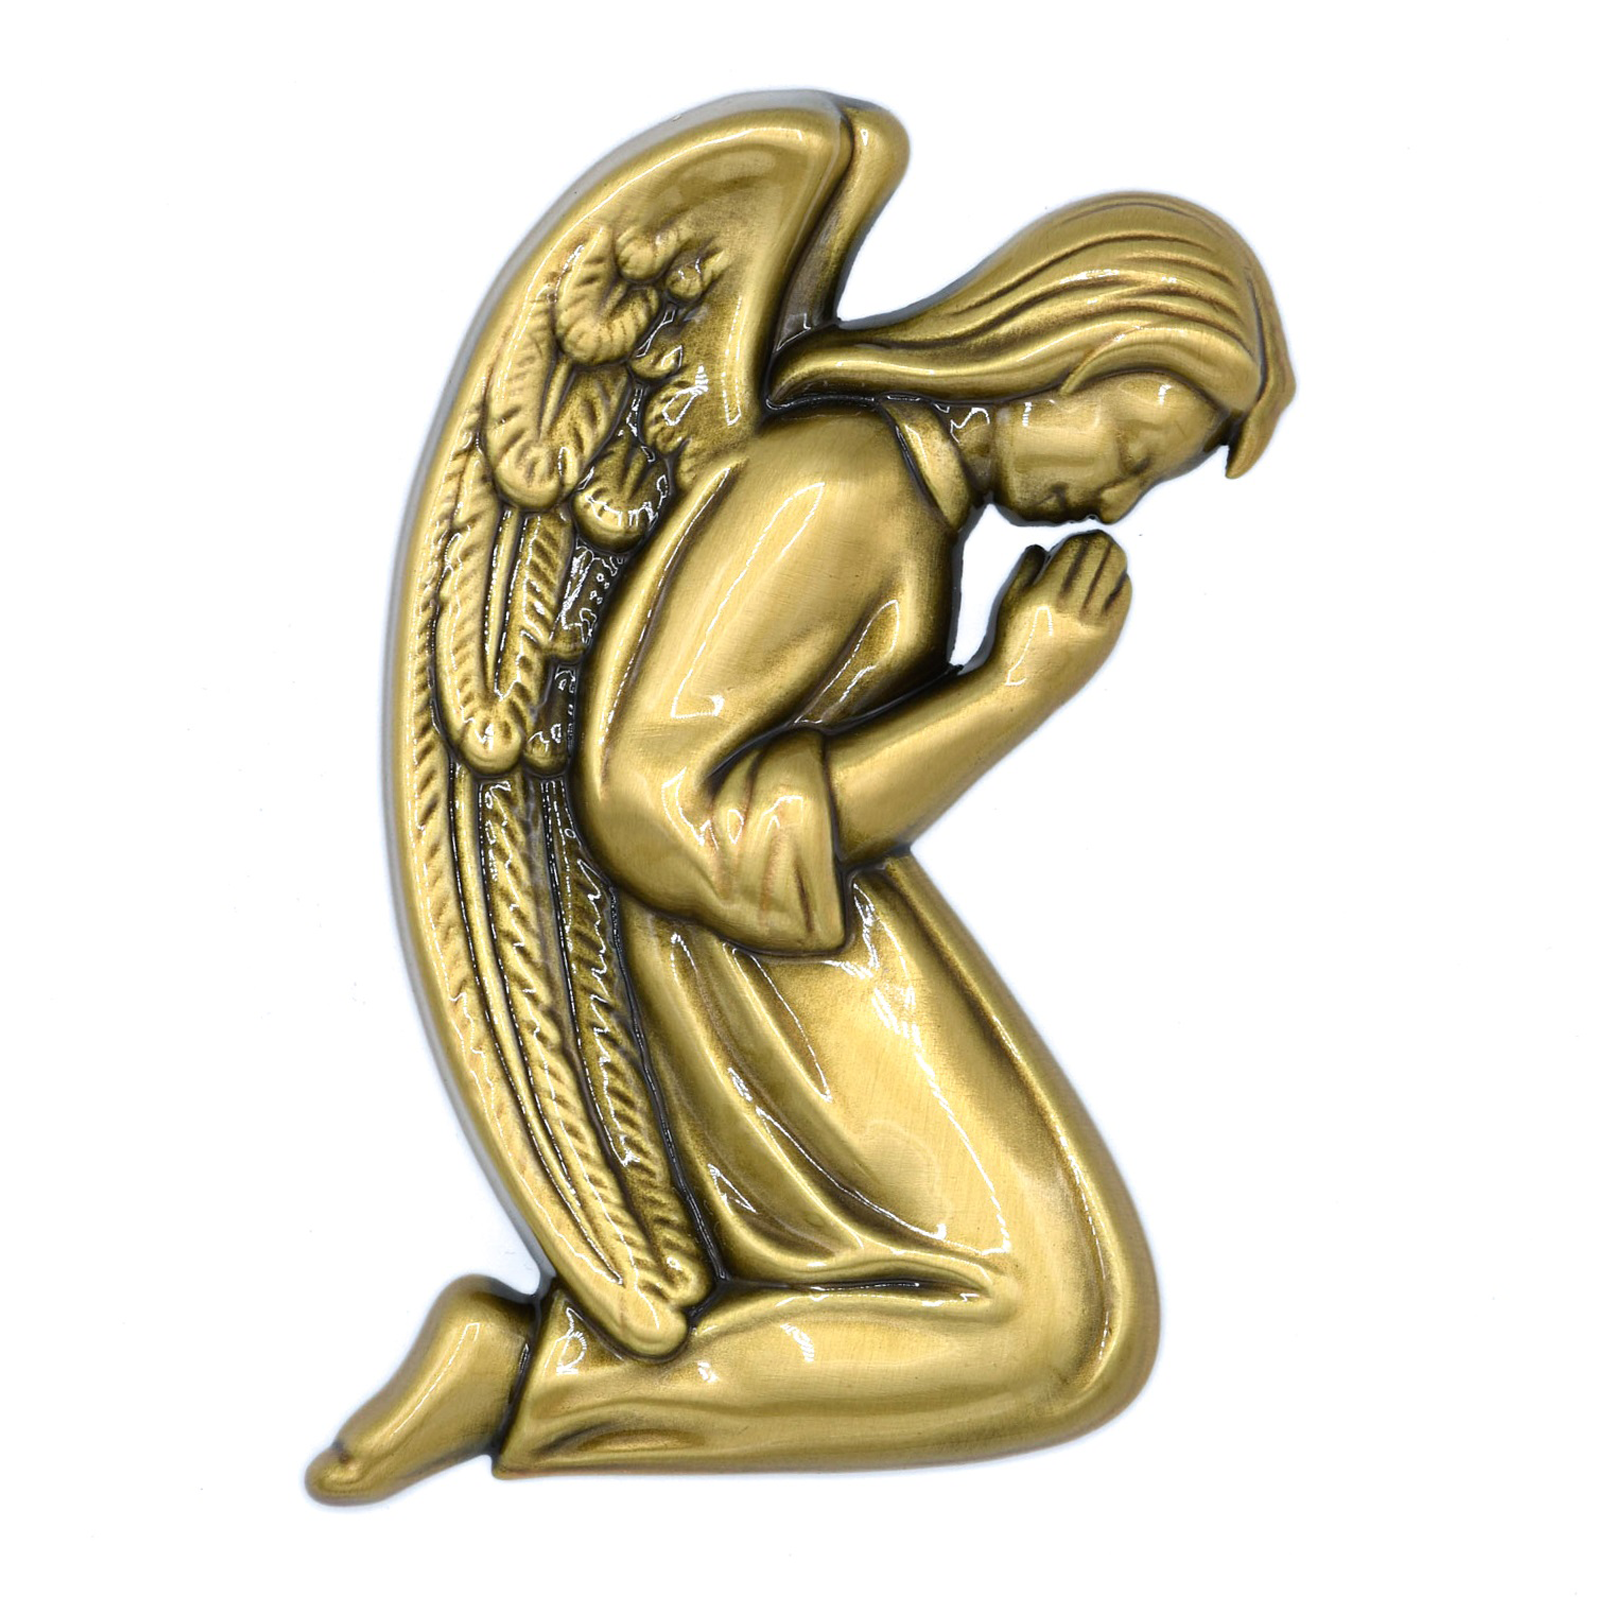 Kneeling Angel (facing right) 3″ x 4.5″